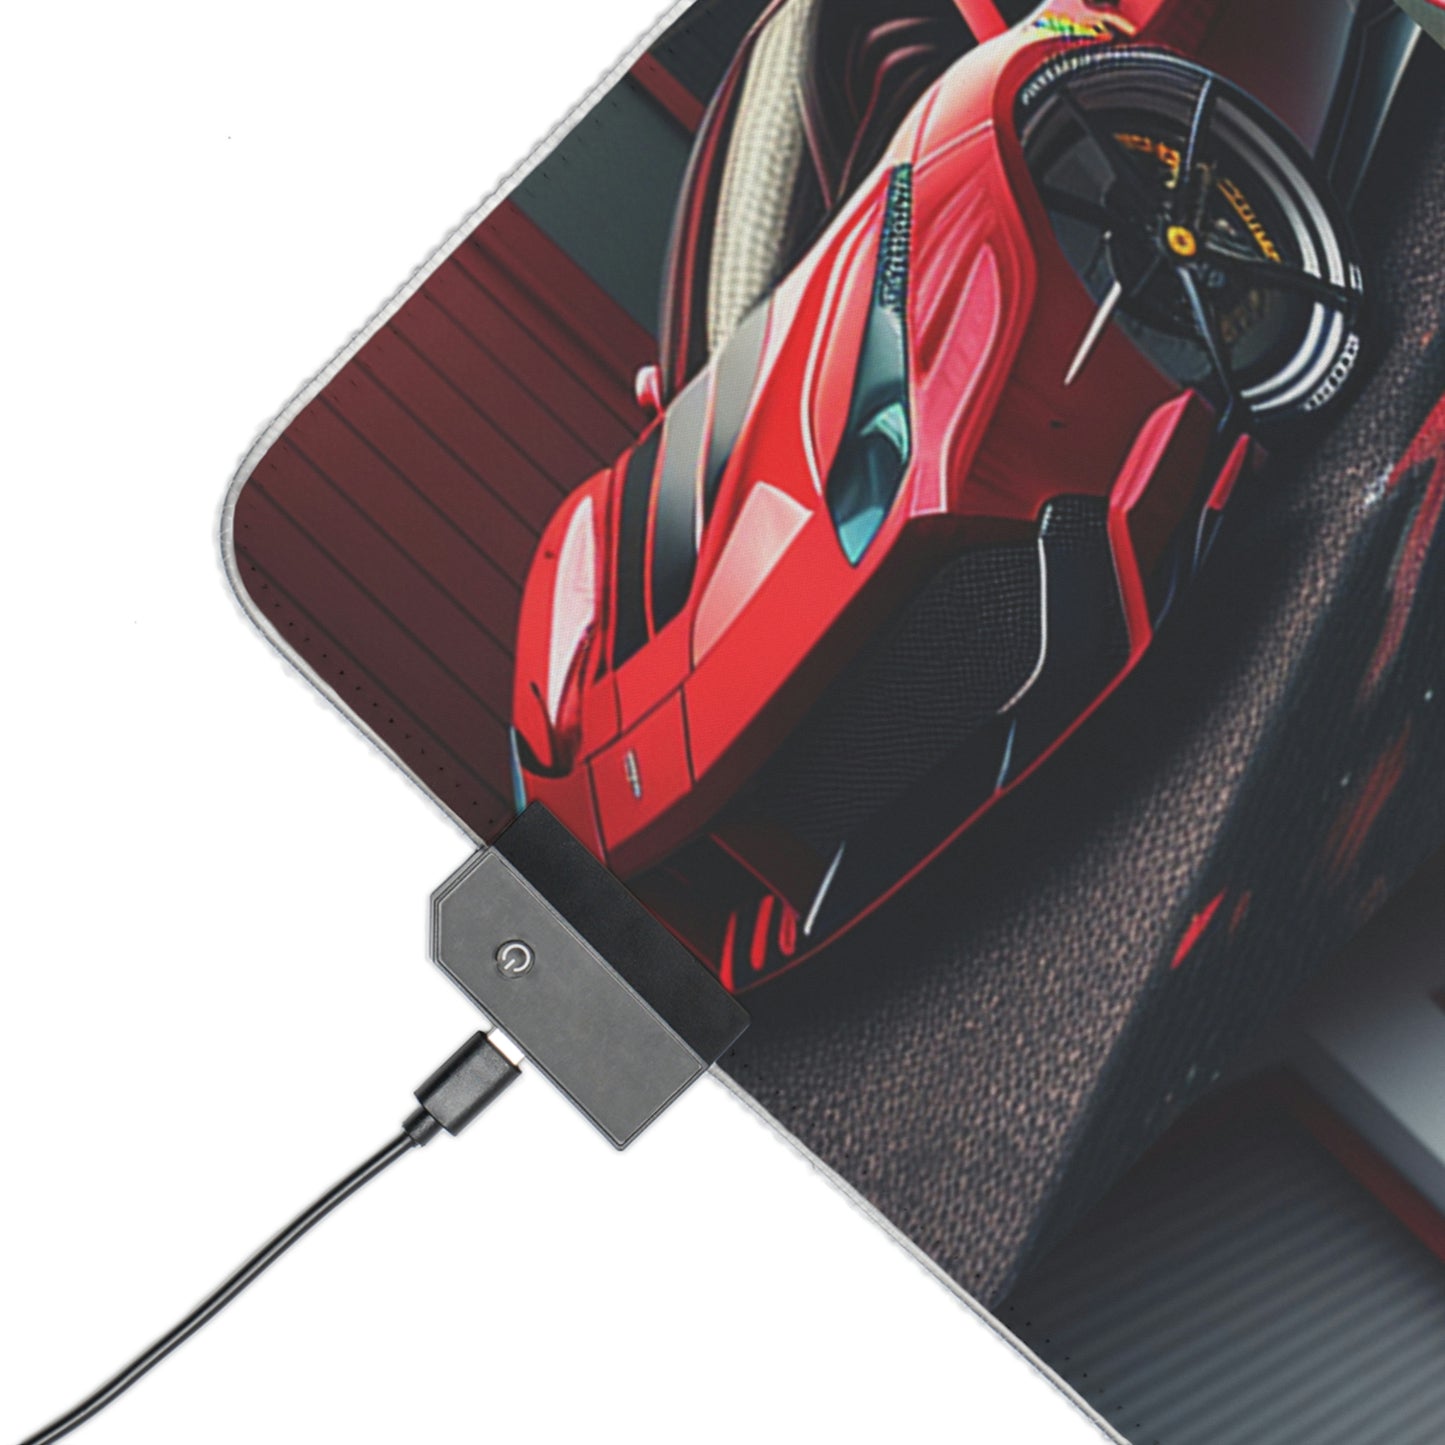 LED Gaming Mouse Pad Ferrari Hyper 4 Pack